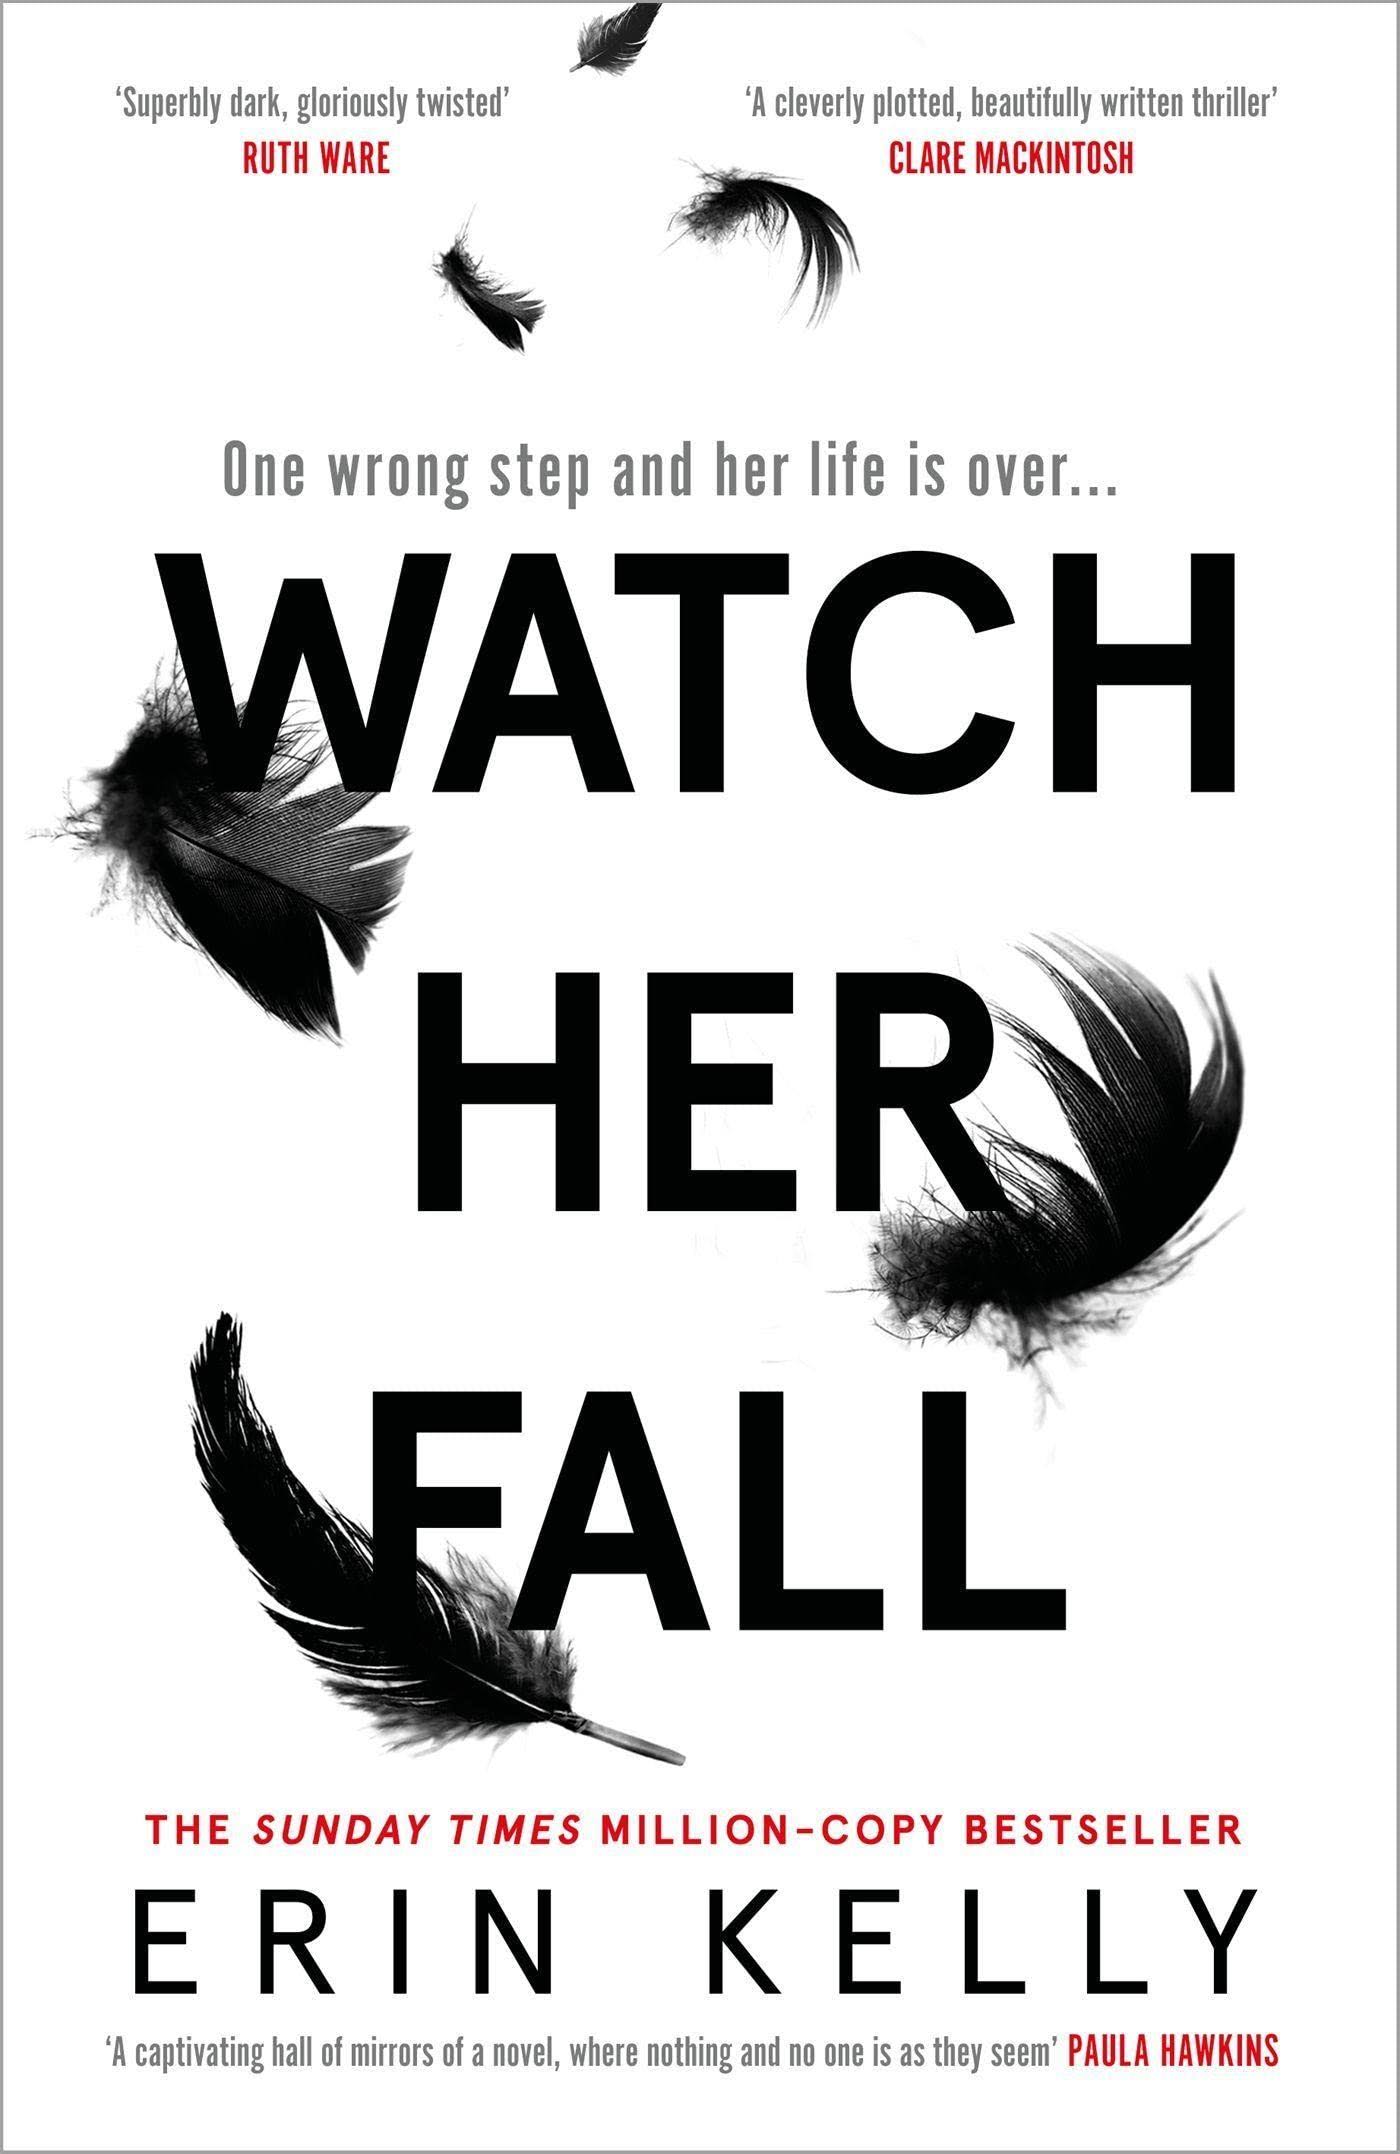 Watch Her Fall [Book]